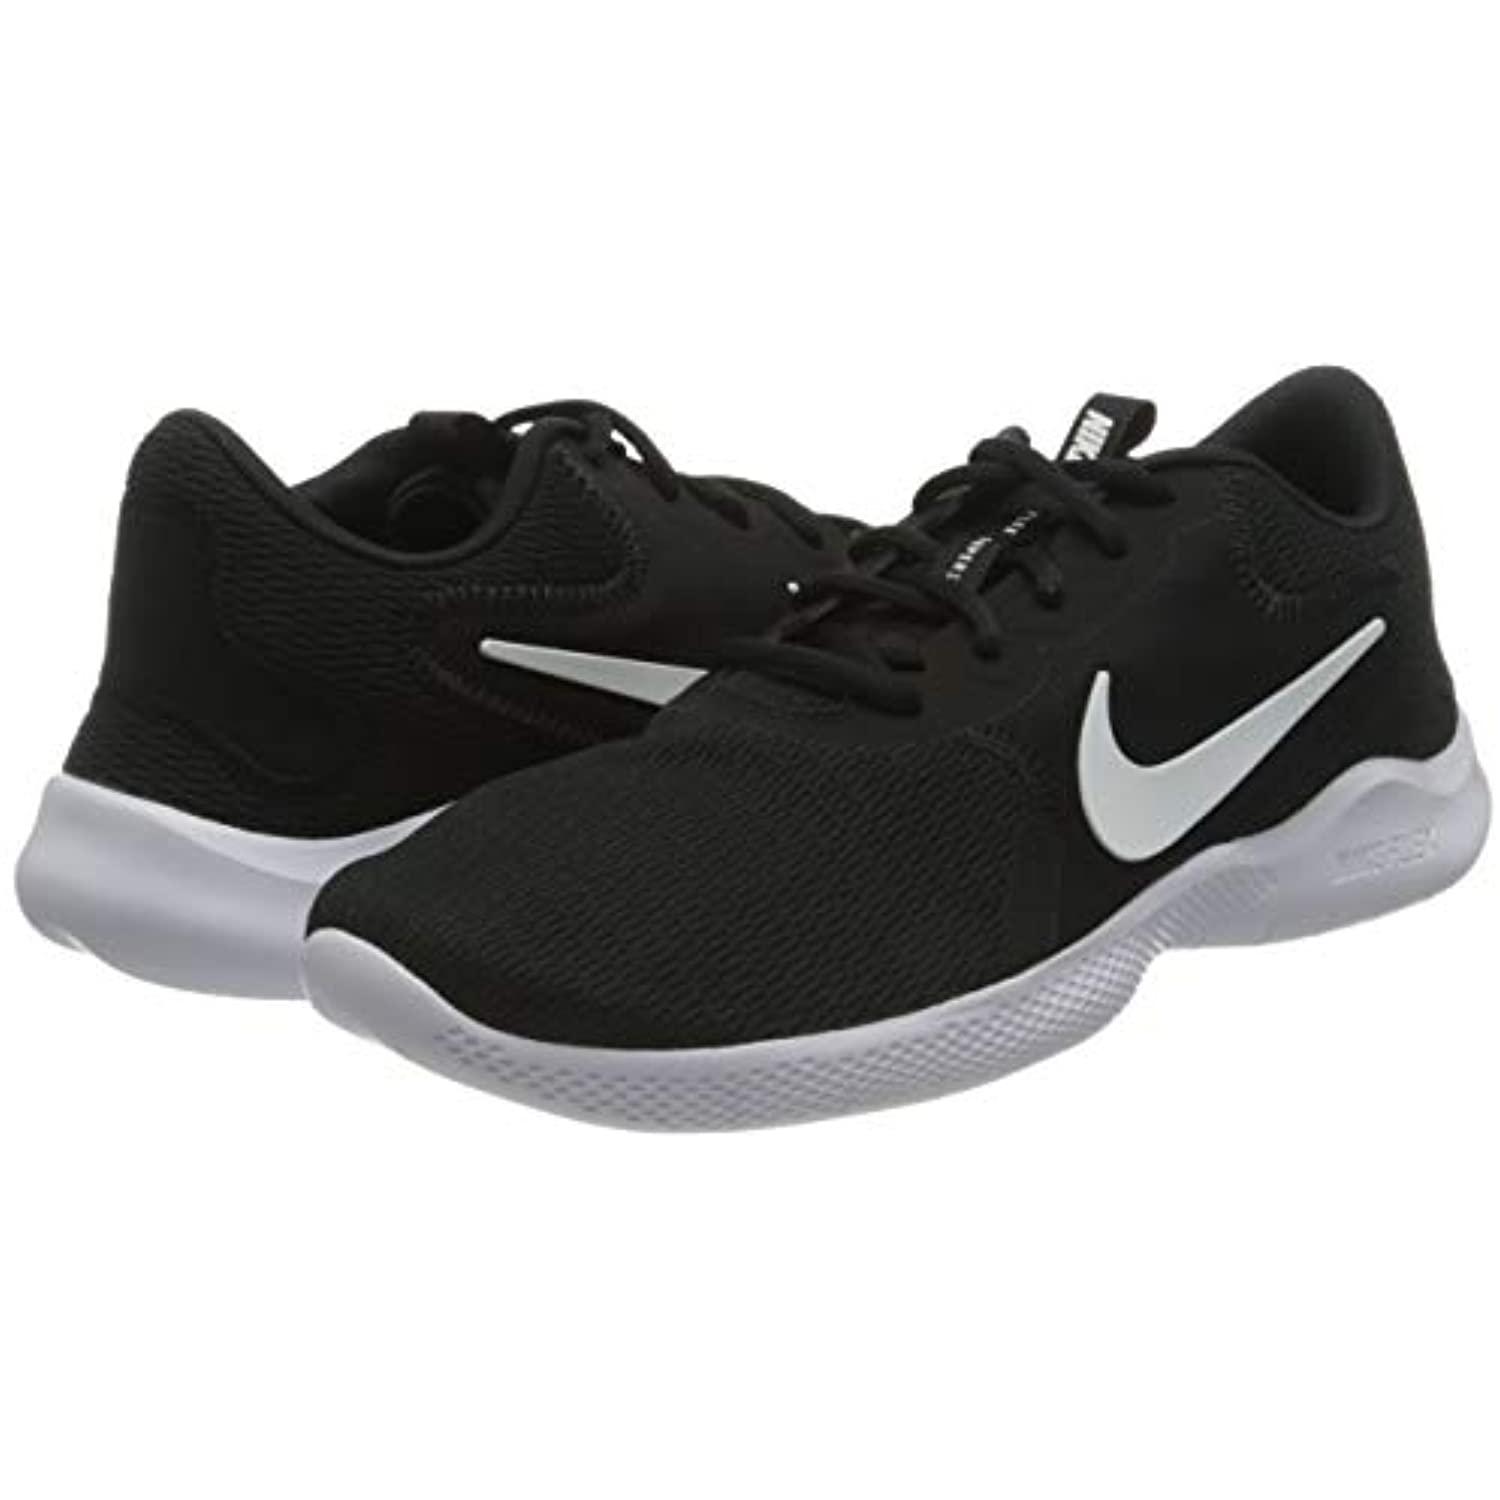 Nike Men's Flex Experience Run 9 Shoe, Black/White-Dark Smoke Grey, 9.5 Regular US - image 4 of 7